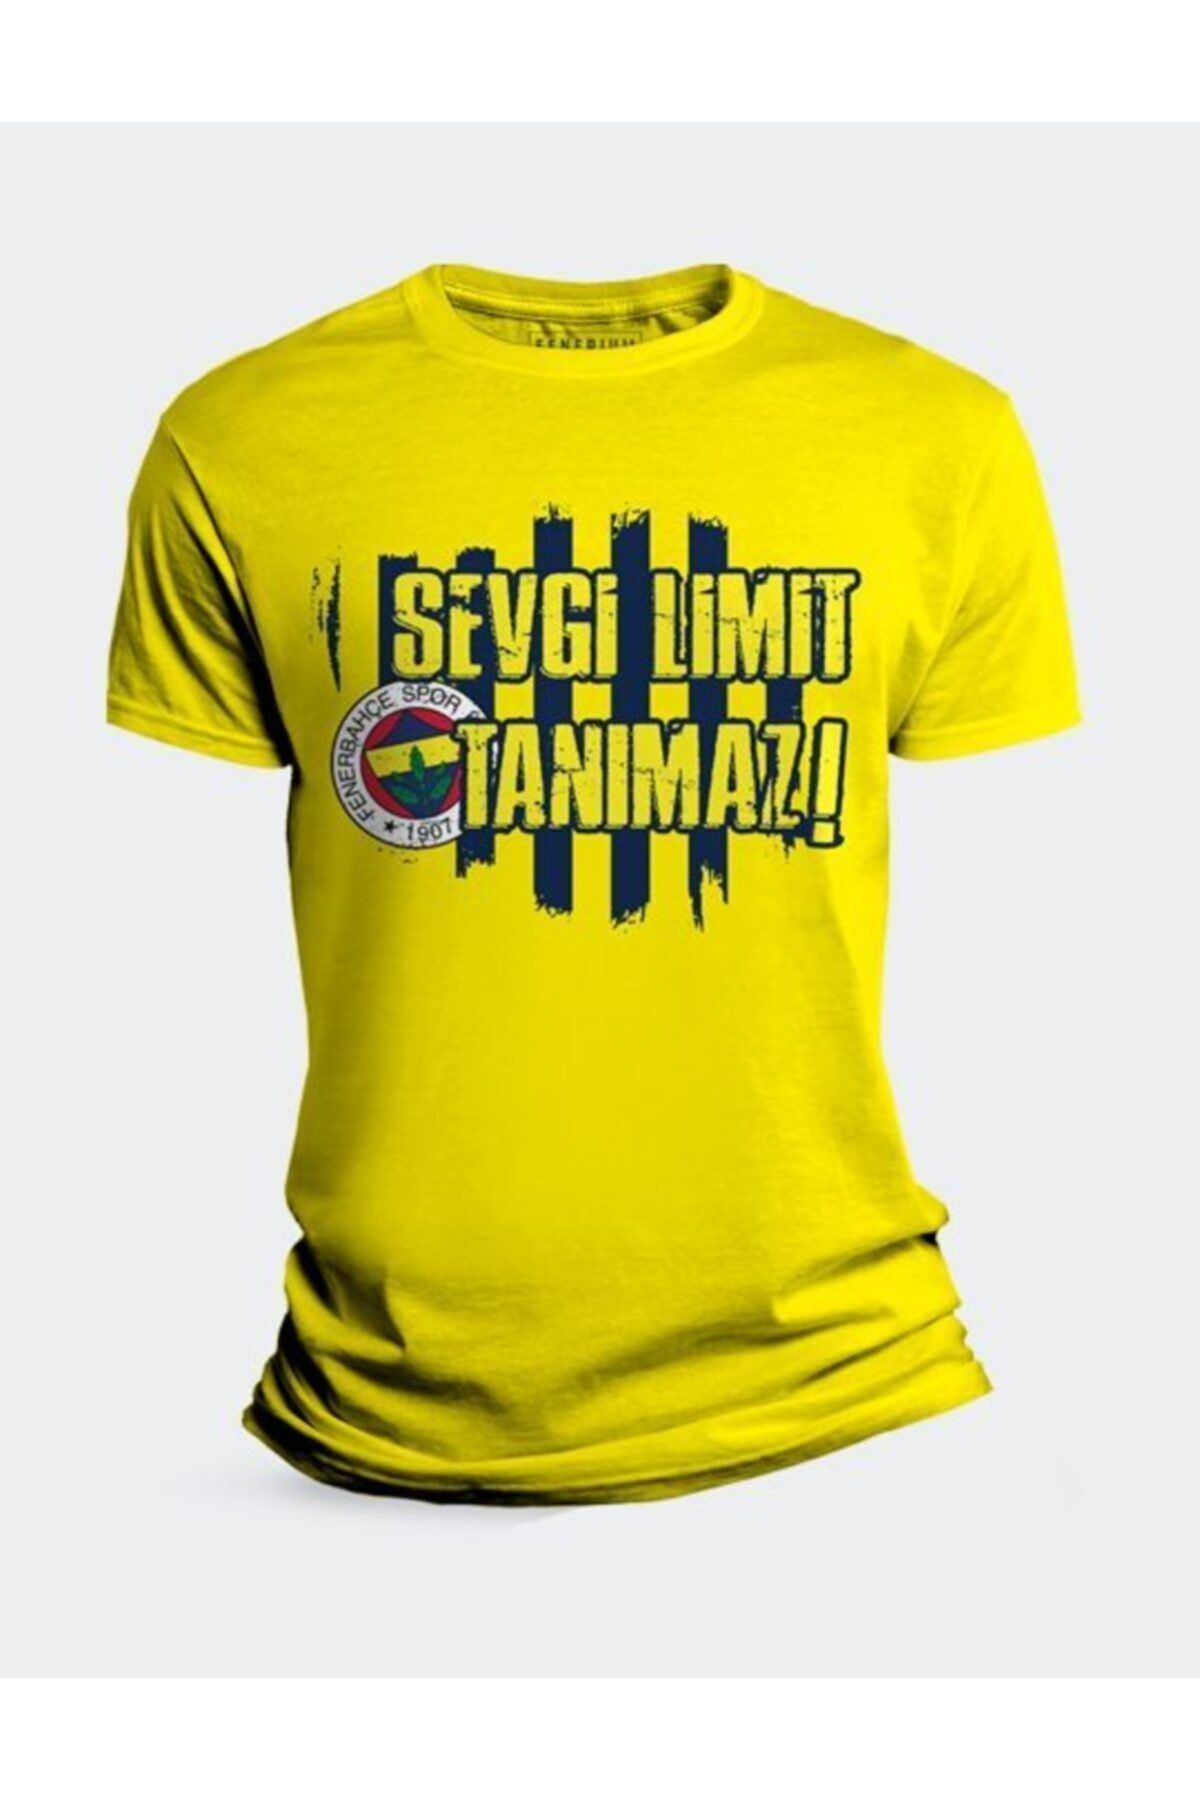 Fenerbahçe Sevgi Limit Tanımaz Sarı